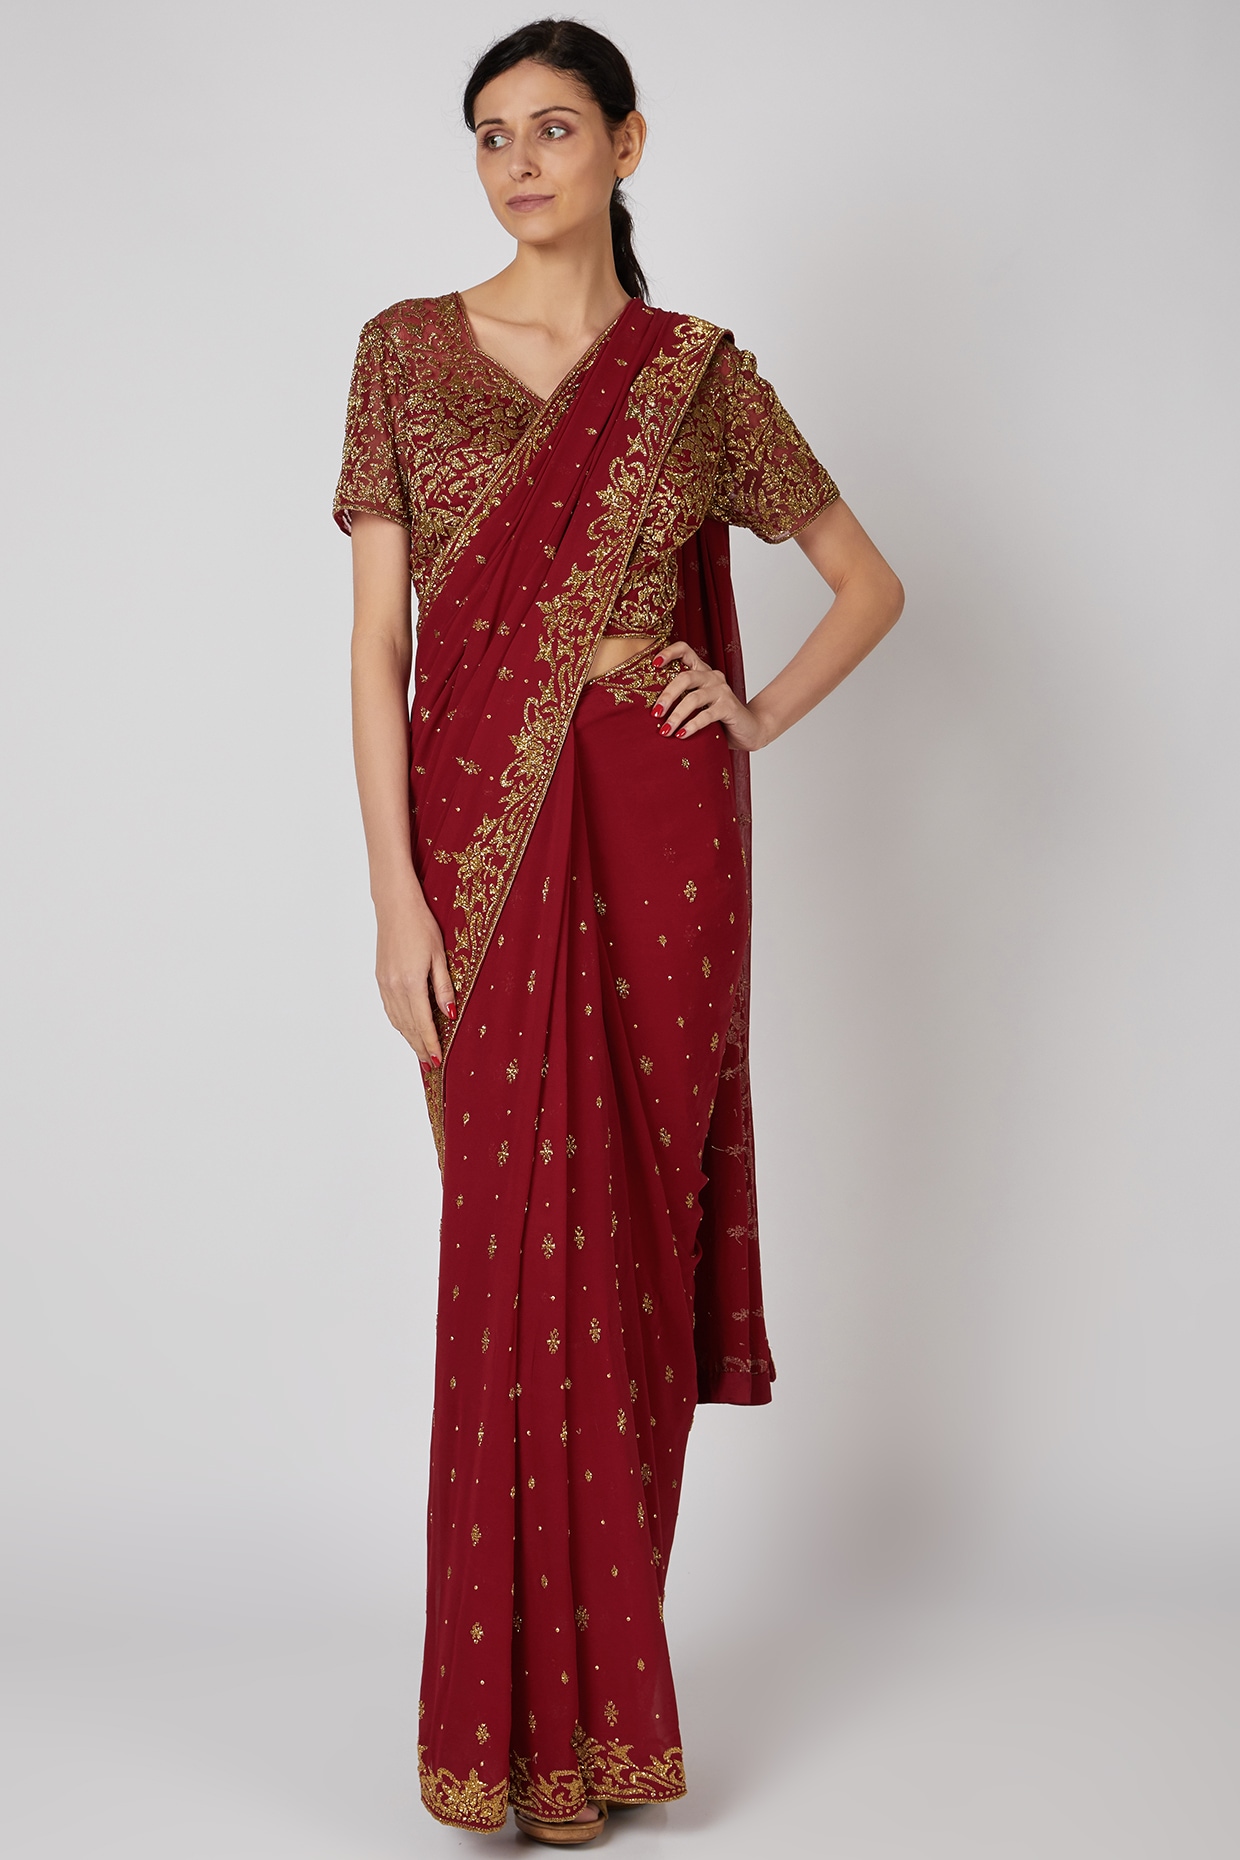 Buy Ravishing Red And Maroon Saree With Unstitched Blouse Kalki Fashion  India